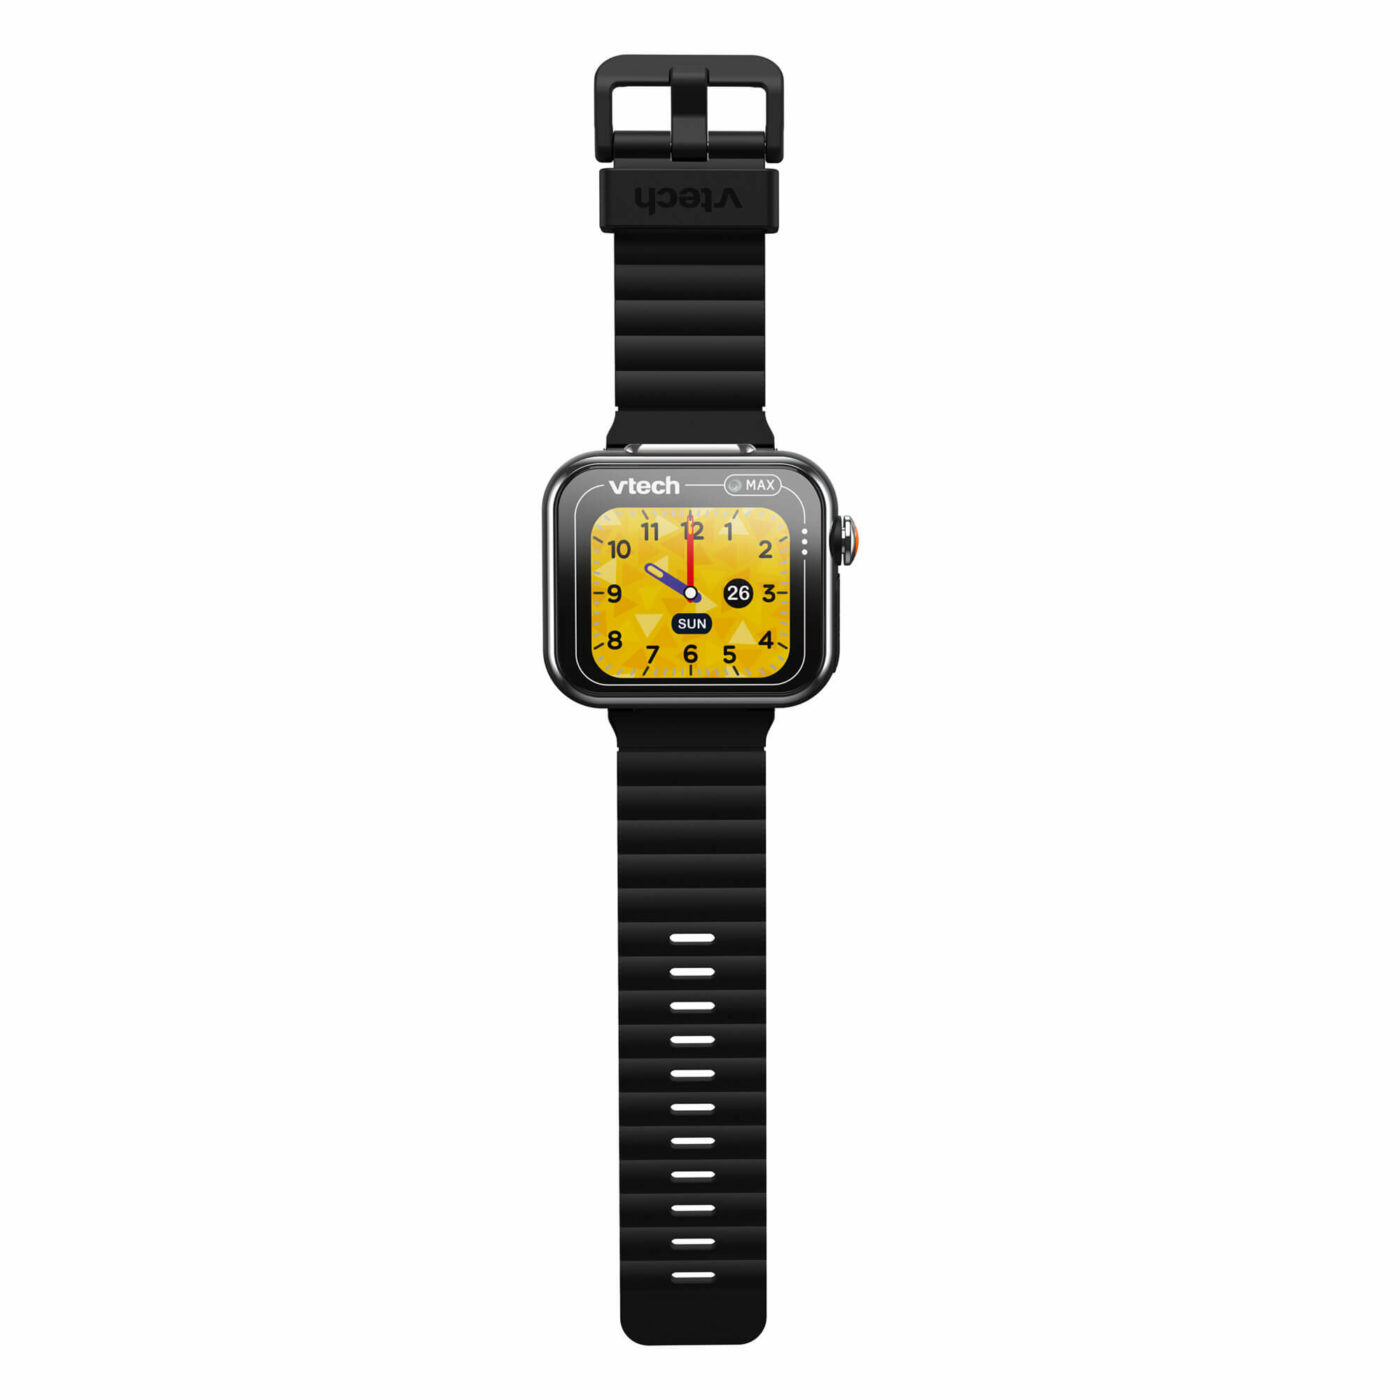 Vtech - Kidizoom Smart Watch Max - Black4